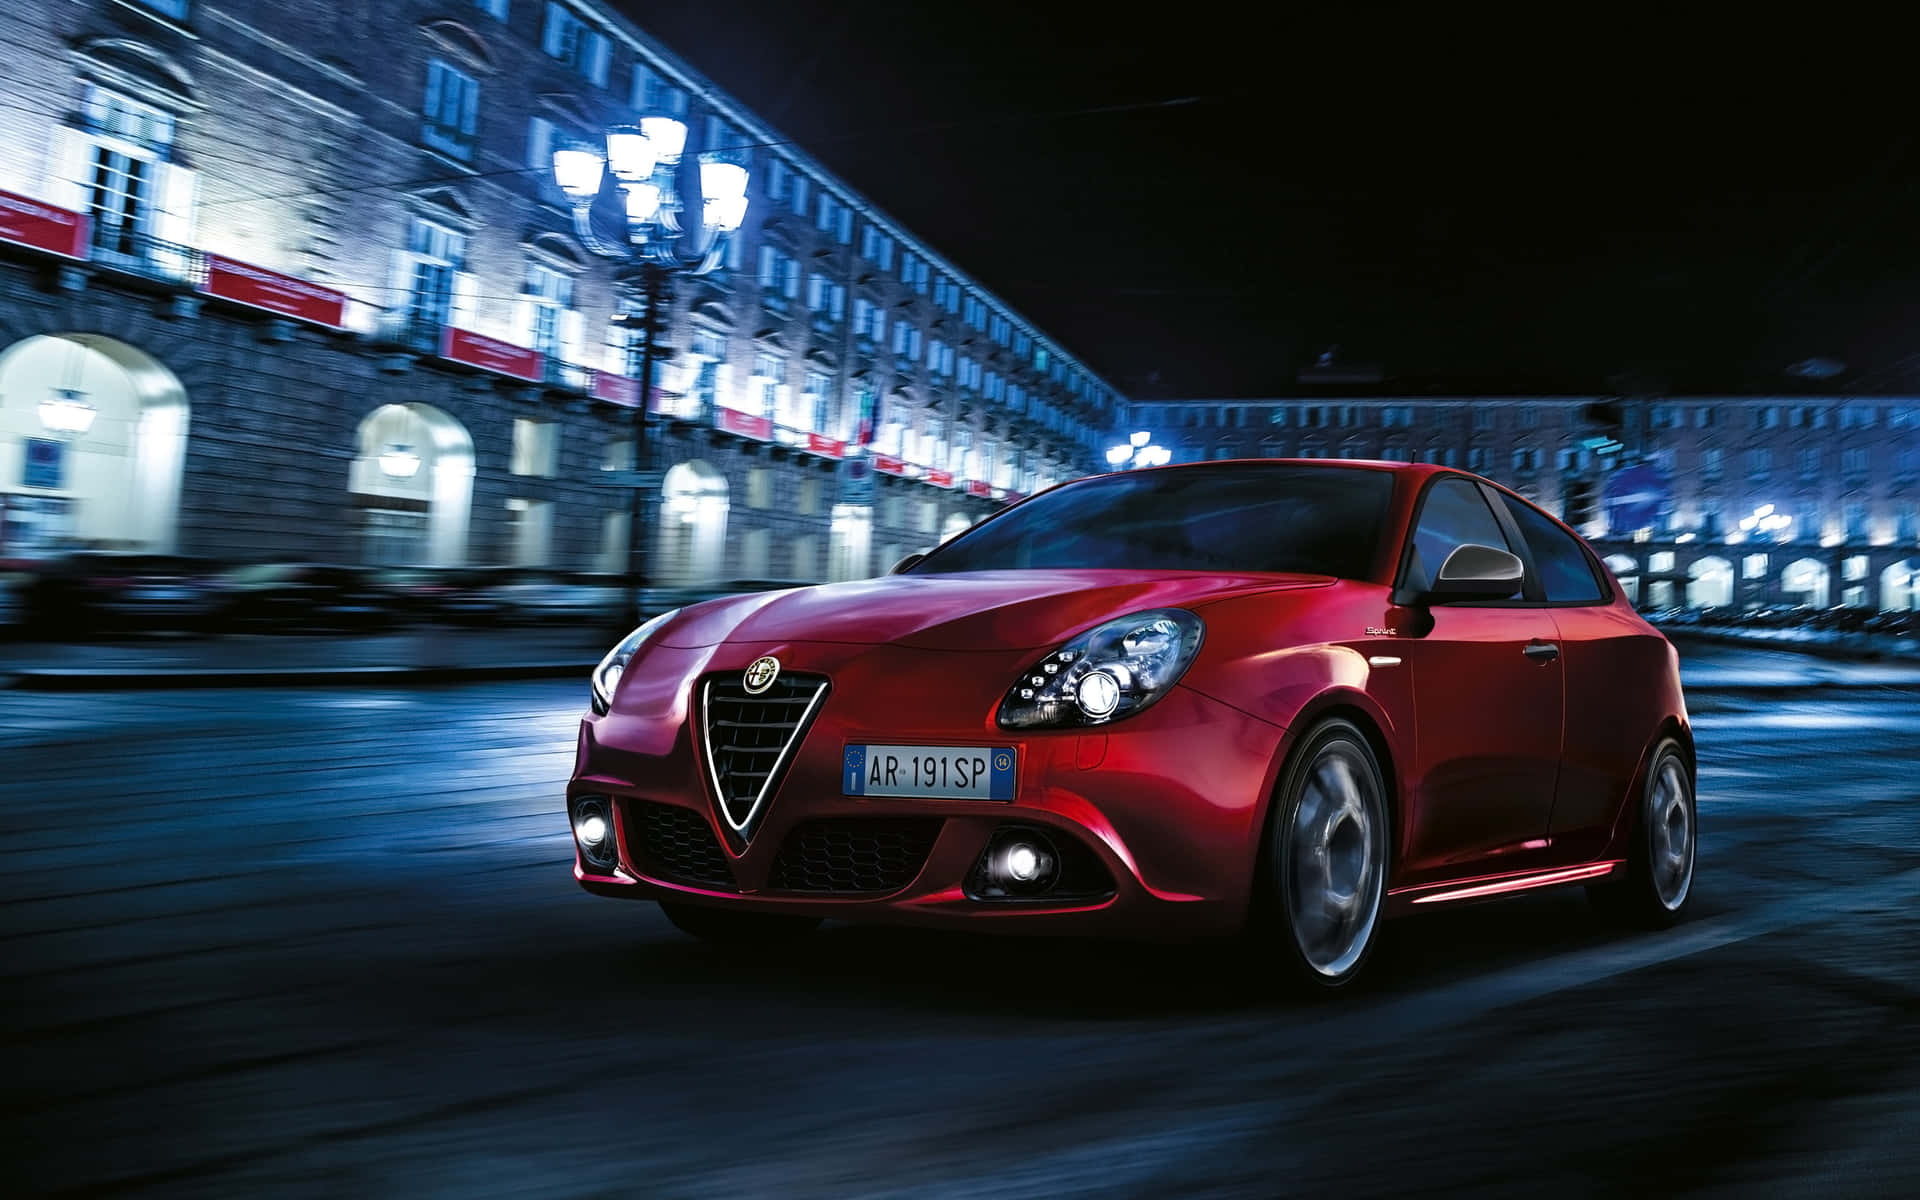 Sleek and Stylish Alfa Romeo Giulietta in Action Wallpaper